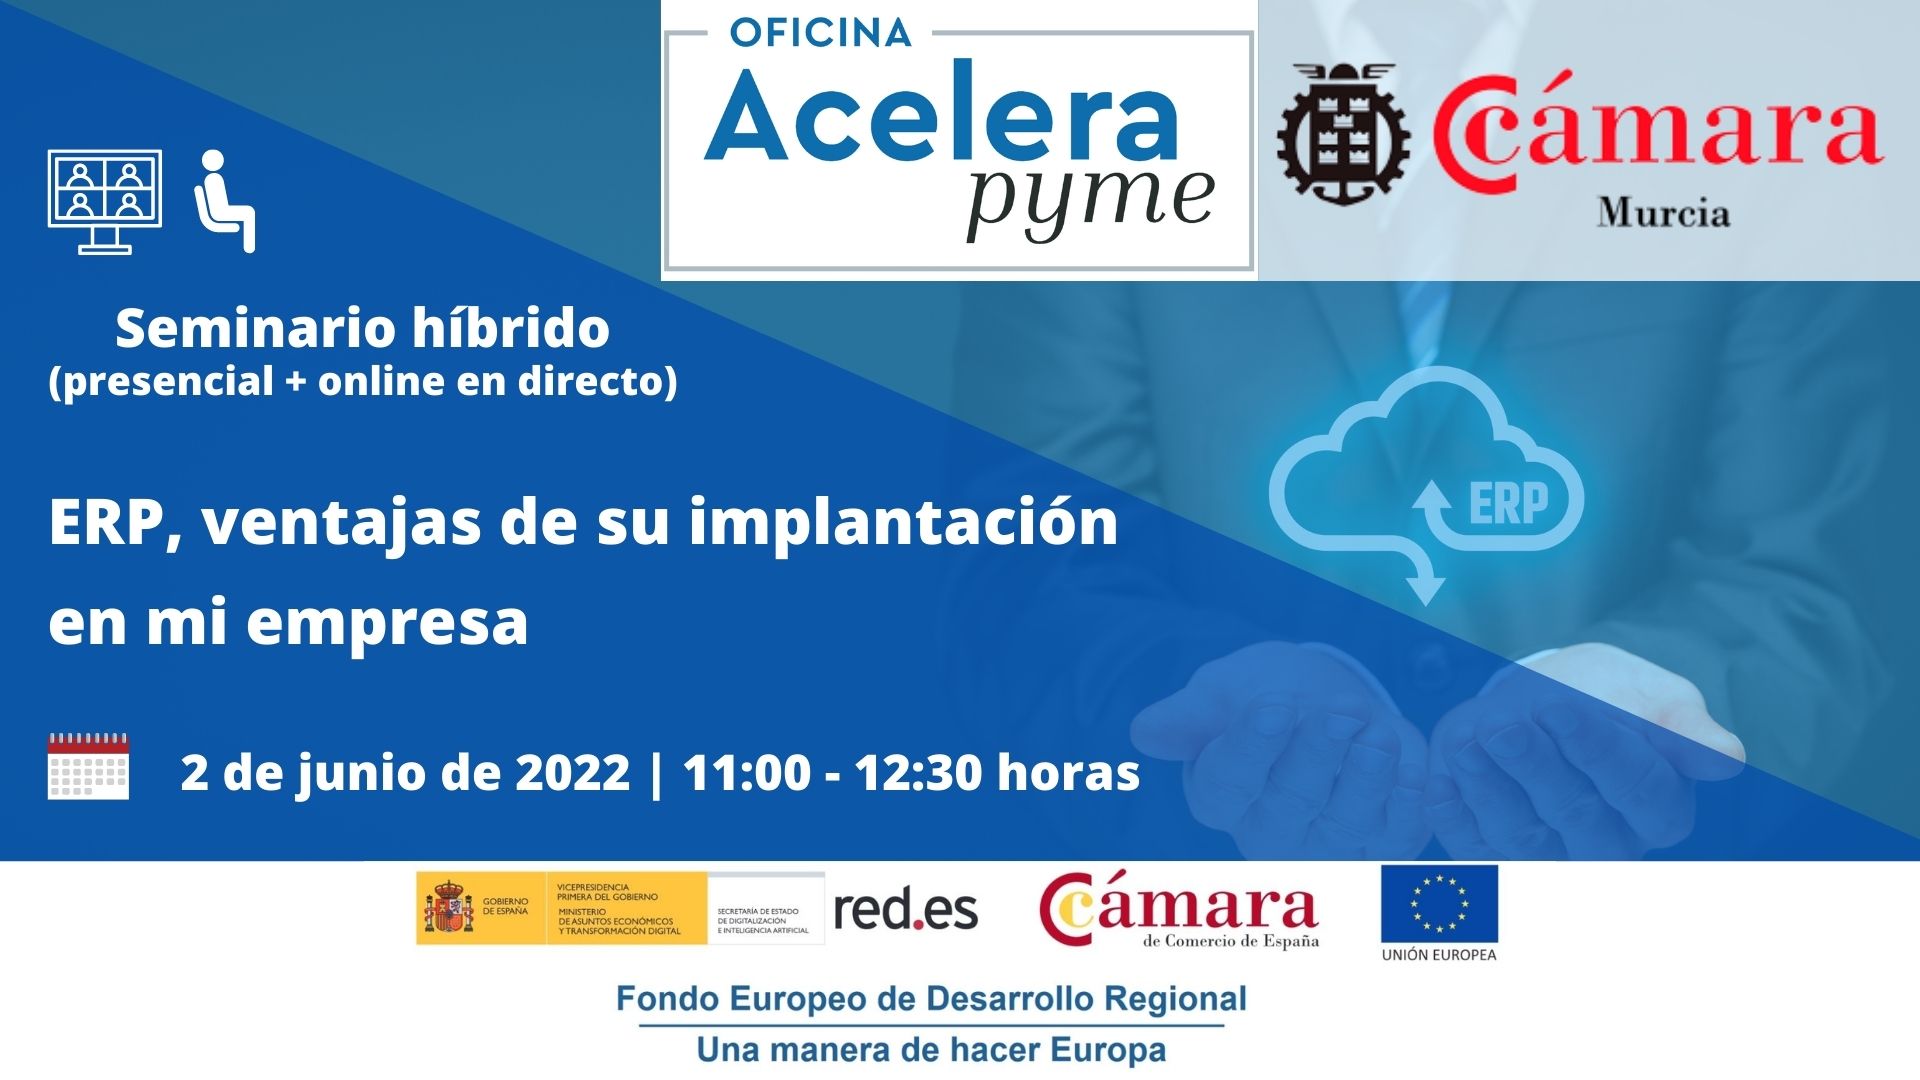 Seminario | ERP, ventajas de implantación en mi empresa | Oficina Acelera Pyme | Cámara de Comercio de Murcia